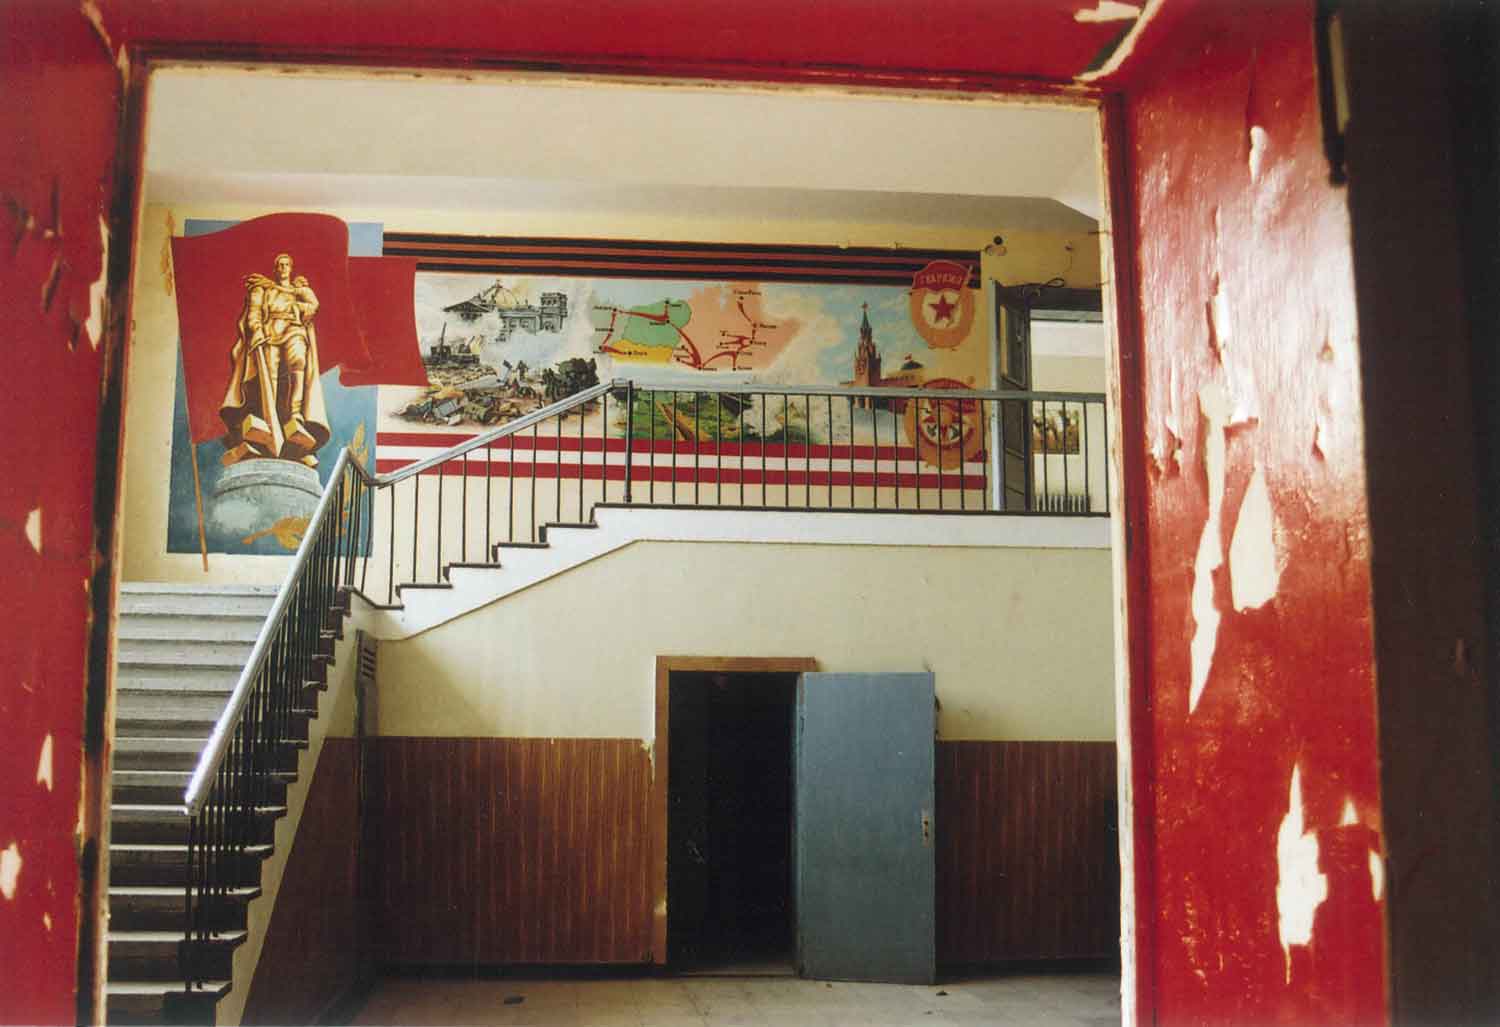 Foto, farbig, innen: Treppenaufgang mit Wandmalerei.